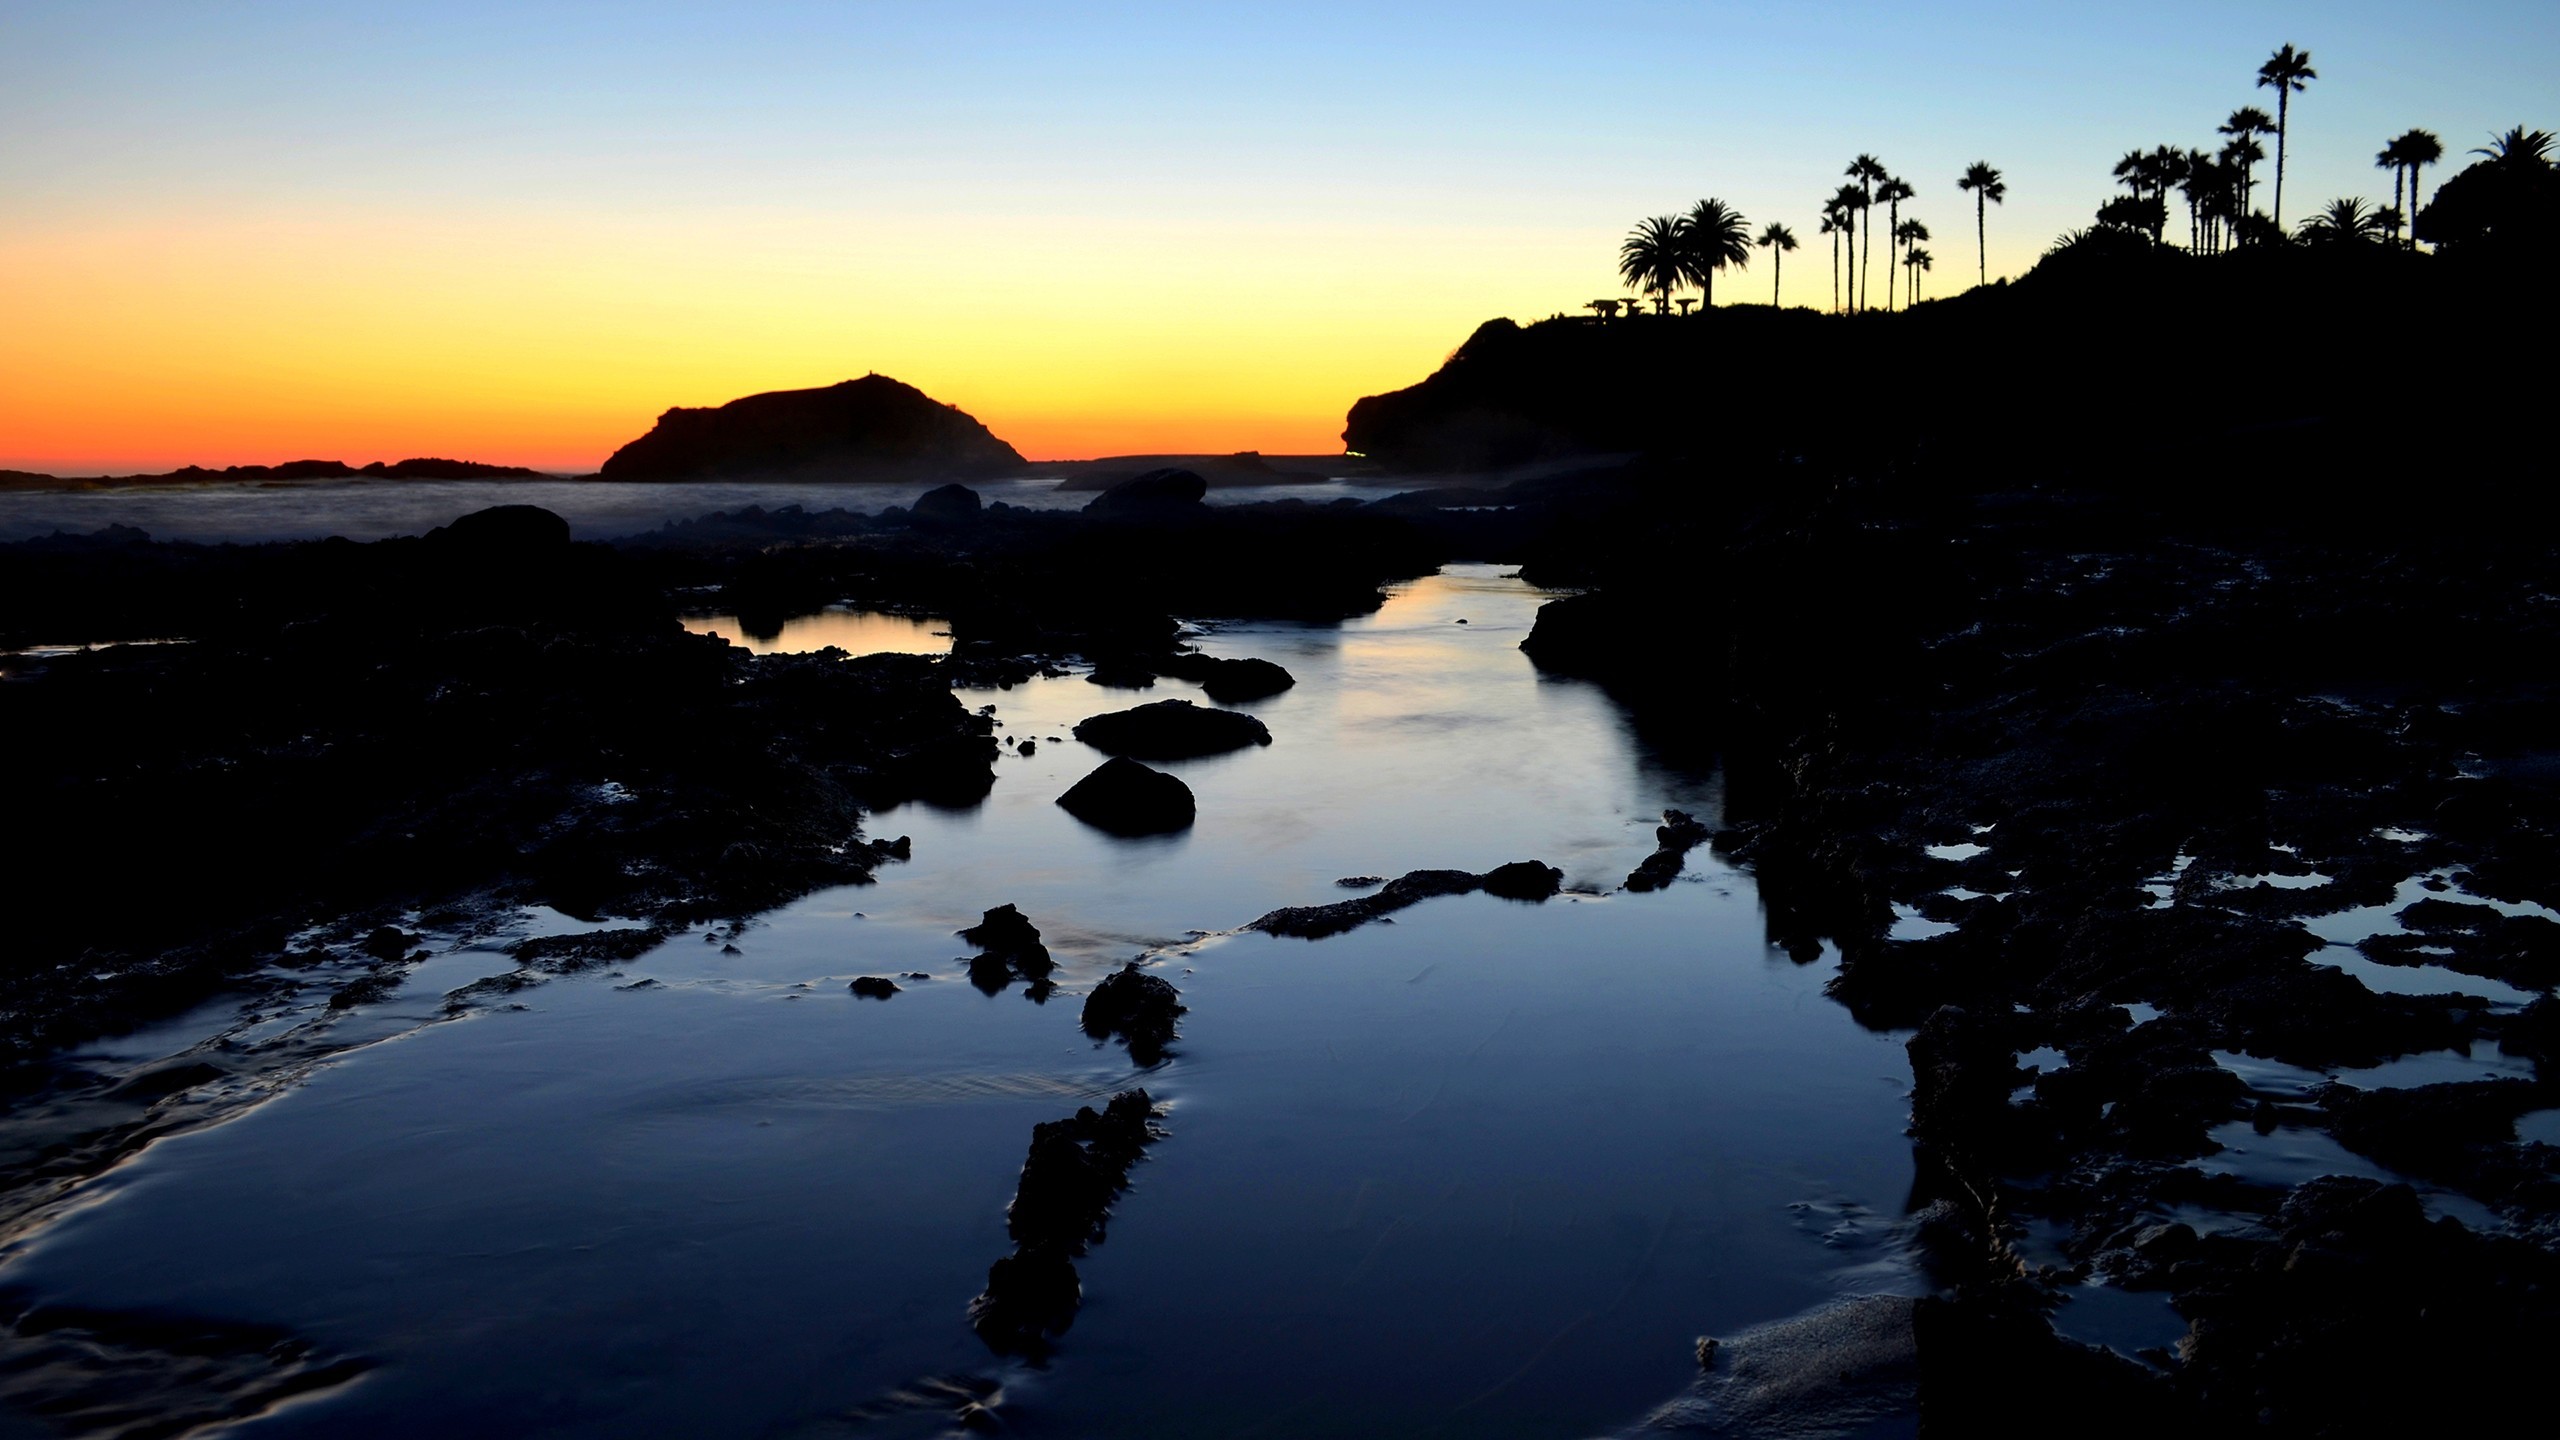 2560x1440 ... x 1440 Original. Description: Download Sunset at Laguna Beach Nature &  Landscape wallpaper ...